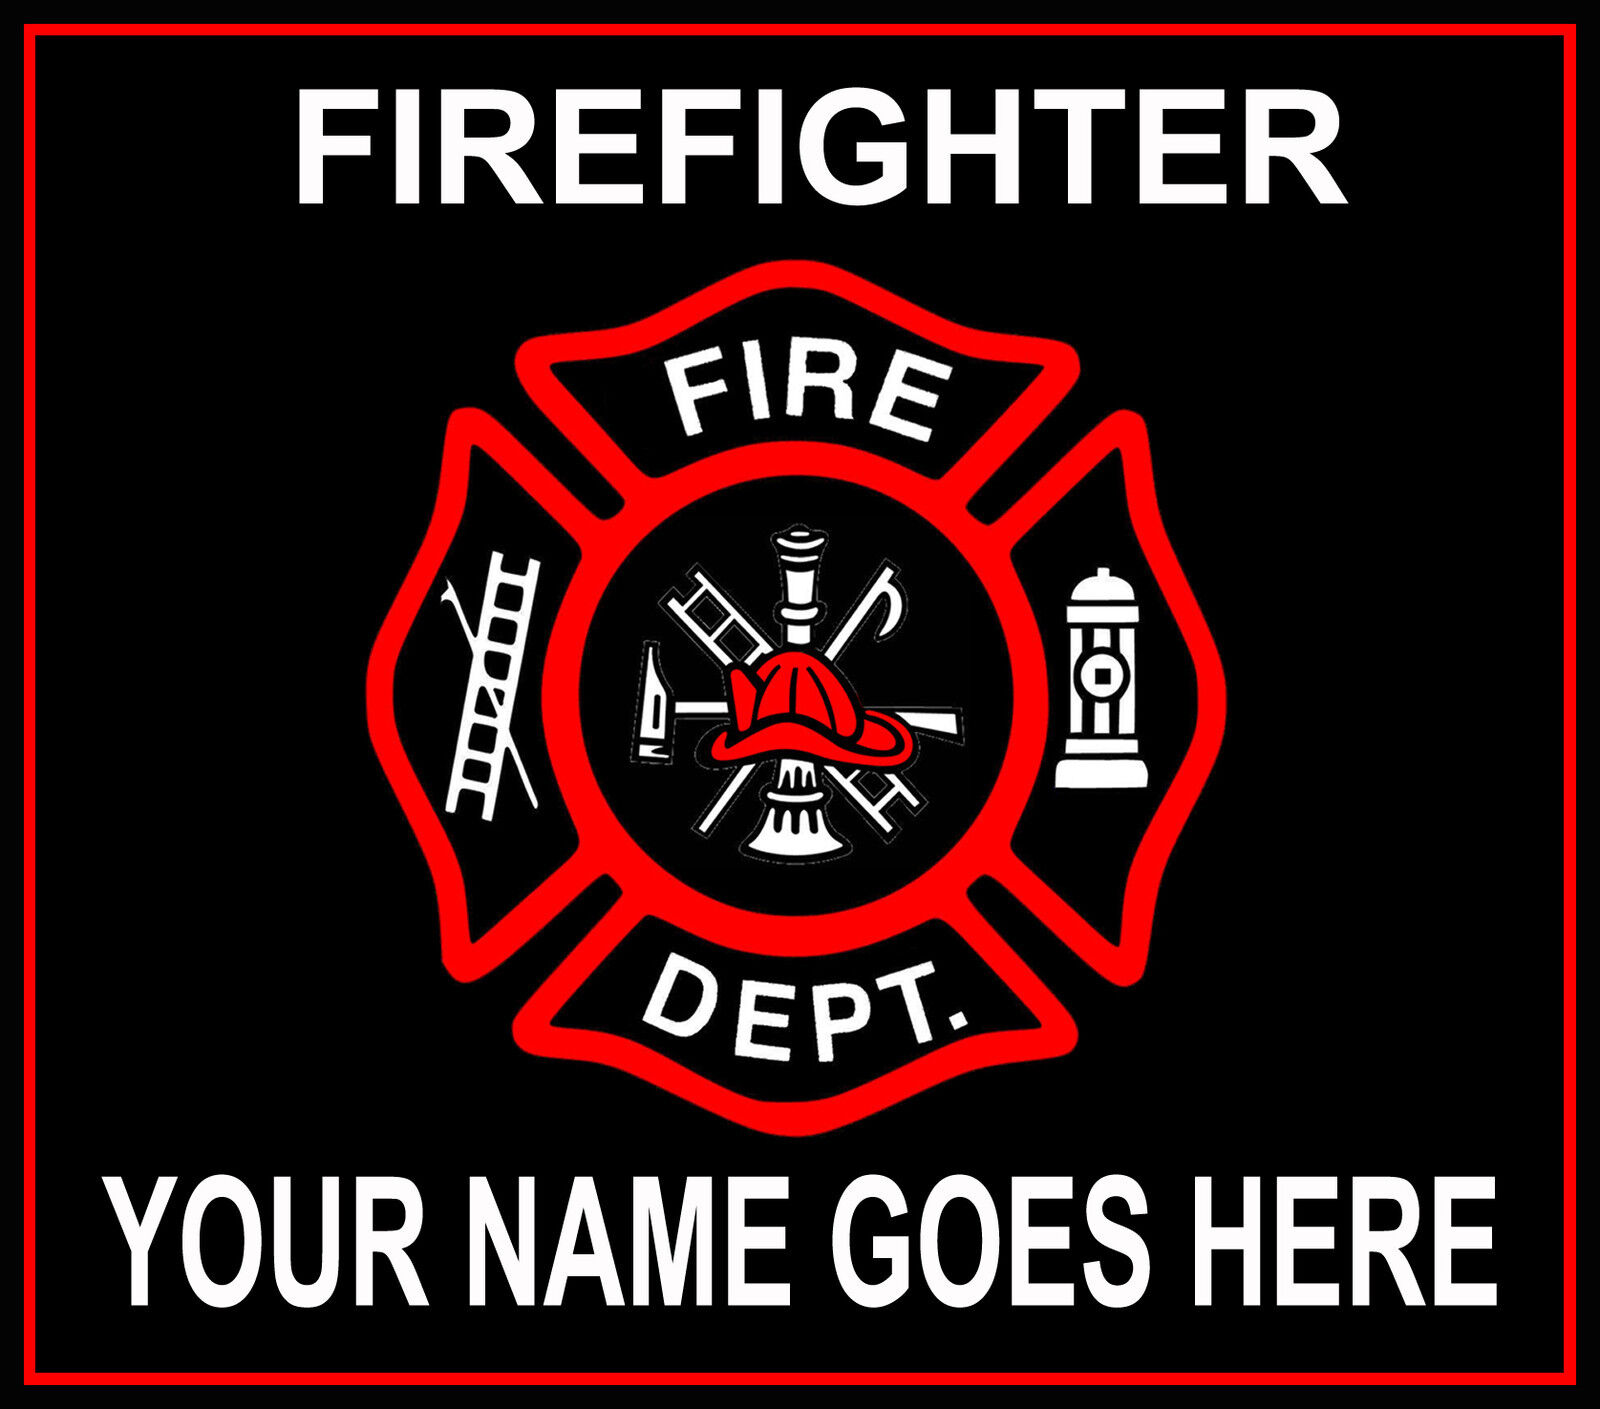 PERSONALIZED FIREFIGHTER FIREMAN FIRE DEPARTMENT FRIDGE LOCKER TOOL BOX MAGNET